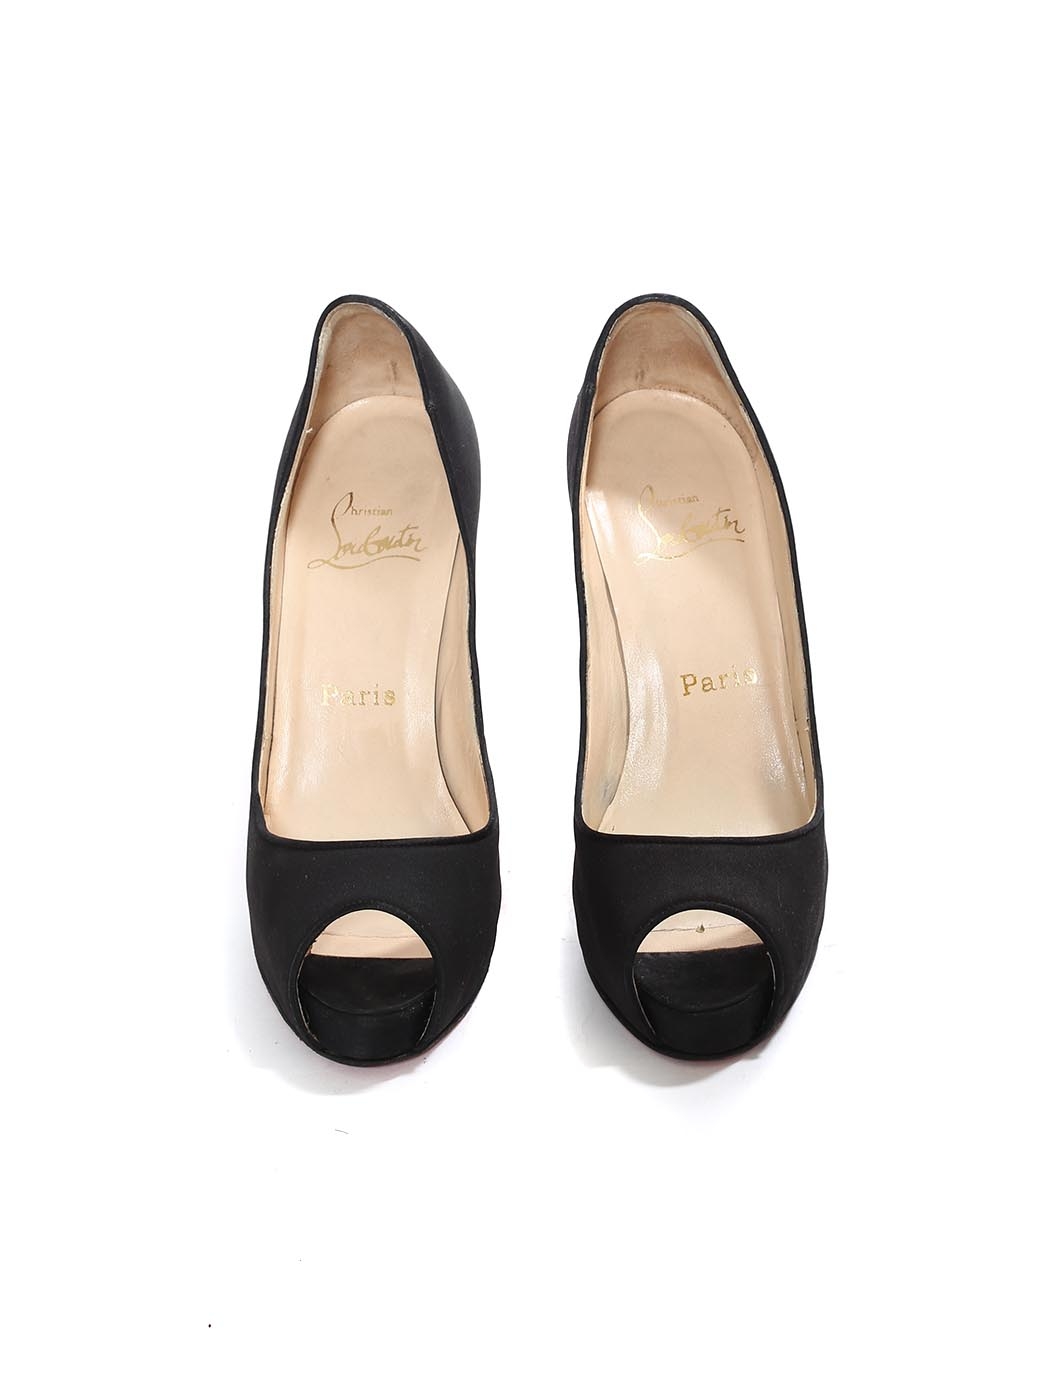 CHRISTIAN LOUBOUTIN Black high heel peep toe pumps Retail €550 Size 35.5